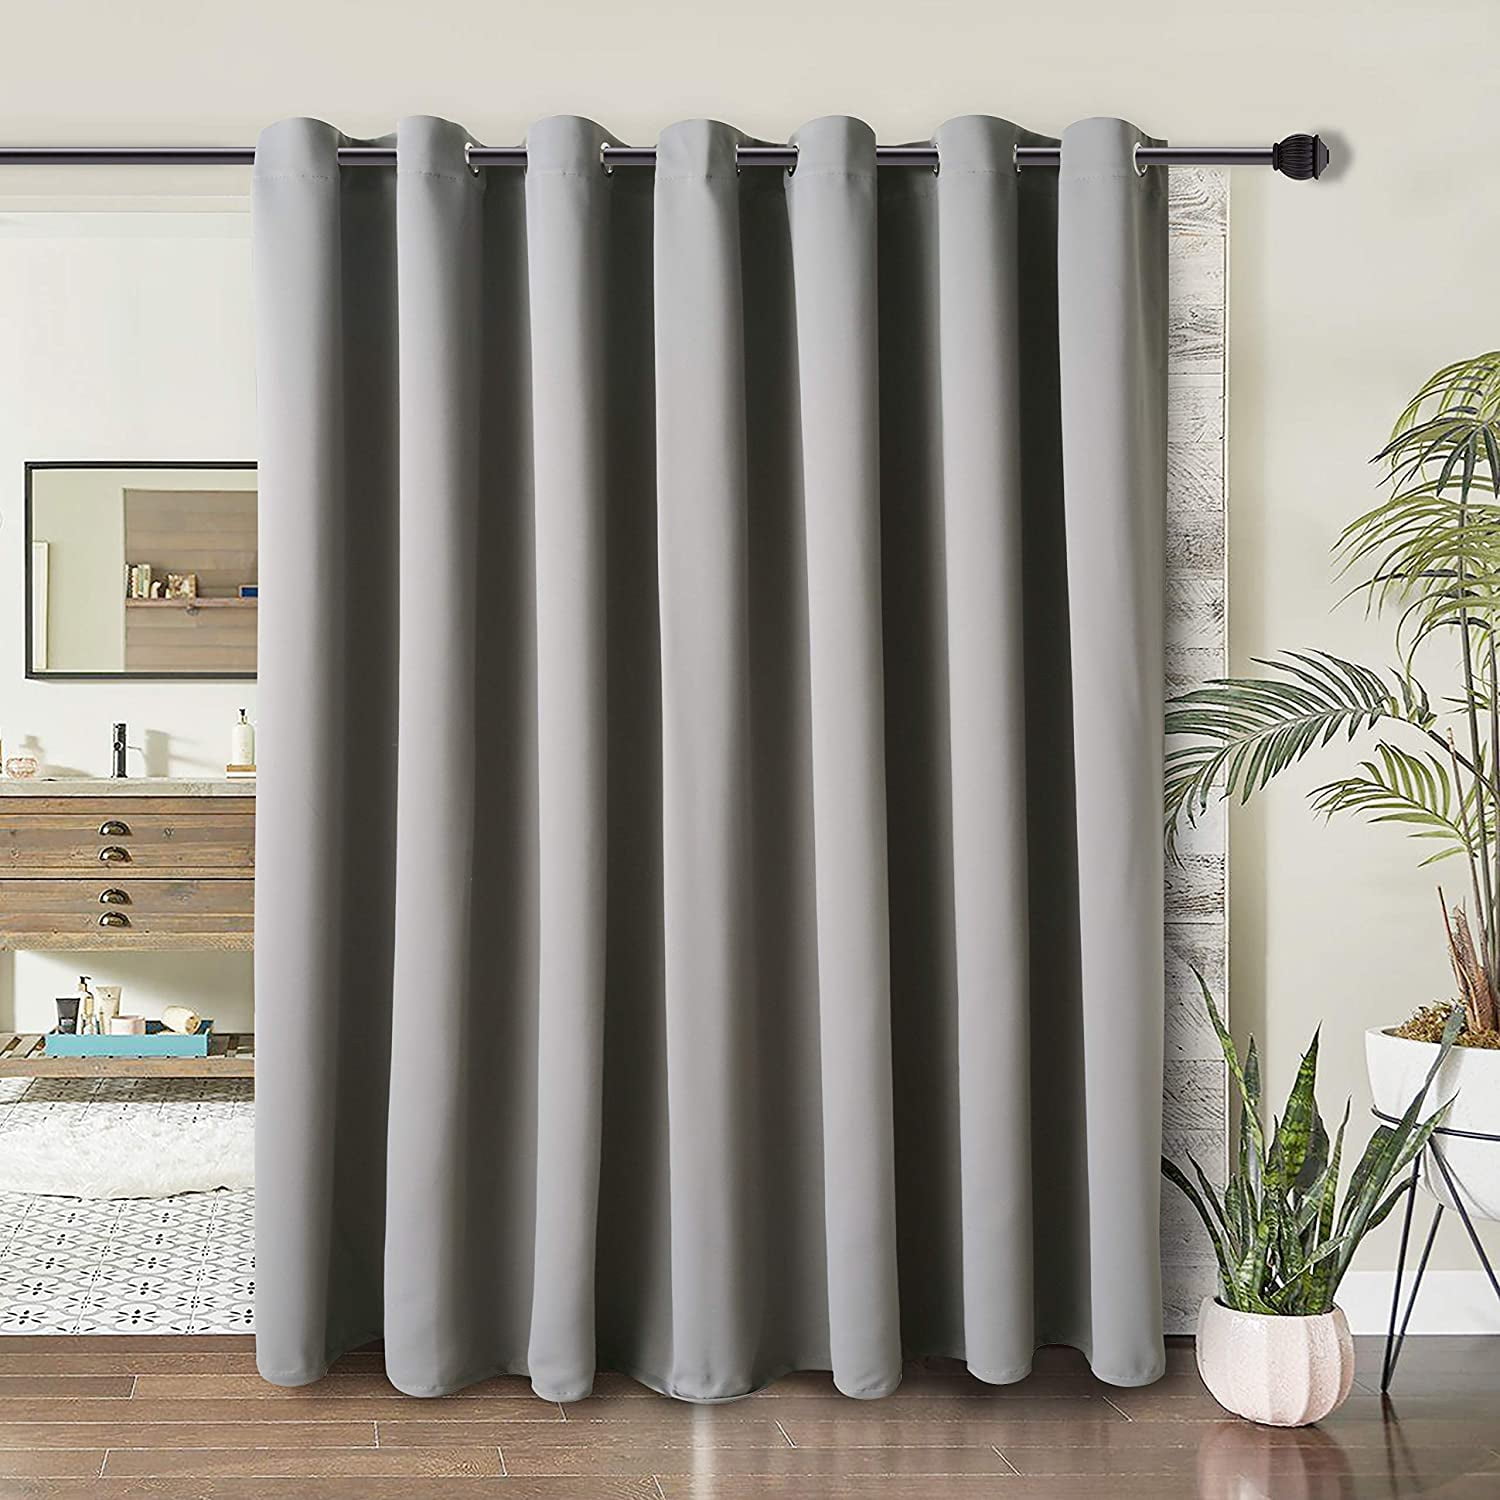 Details about   H.VERSAILTEX Blackout Patio Curtain 100 x 96 Inches Single Panel Grommet Top 